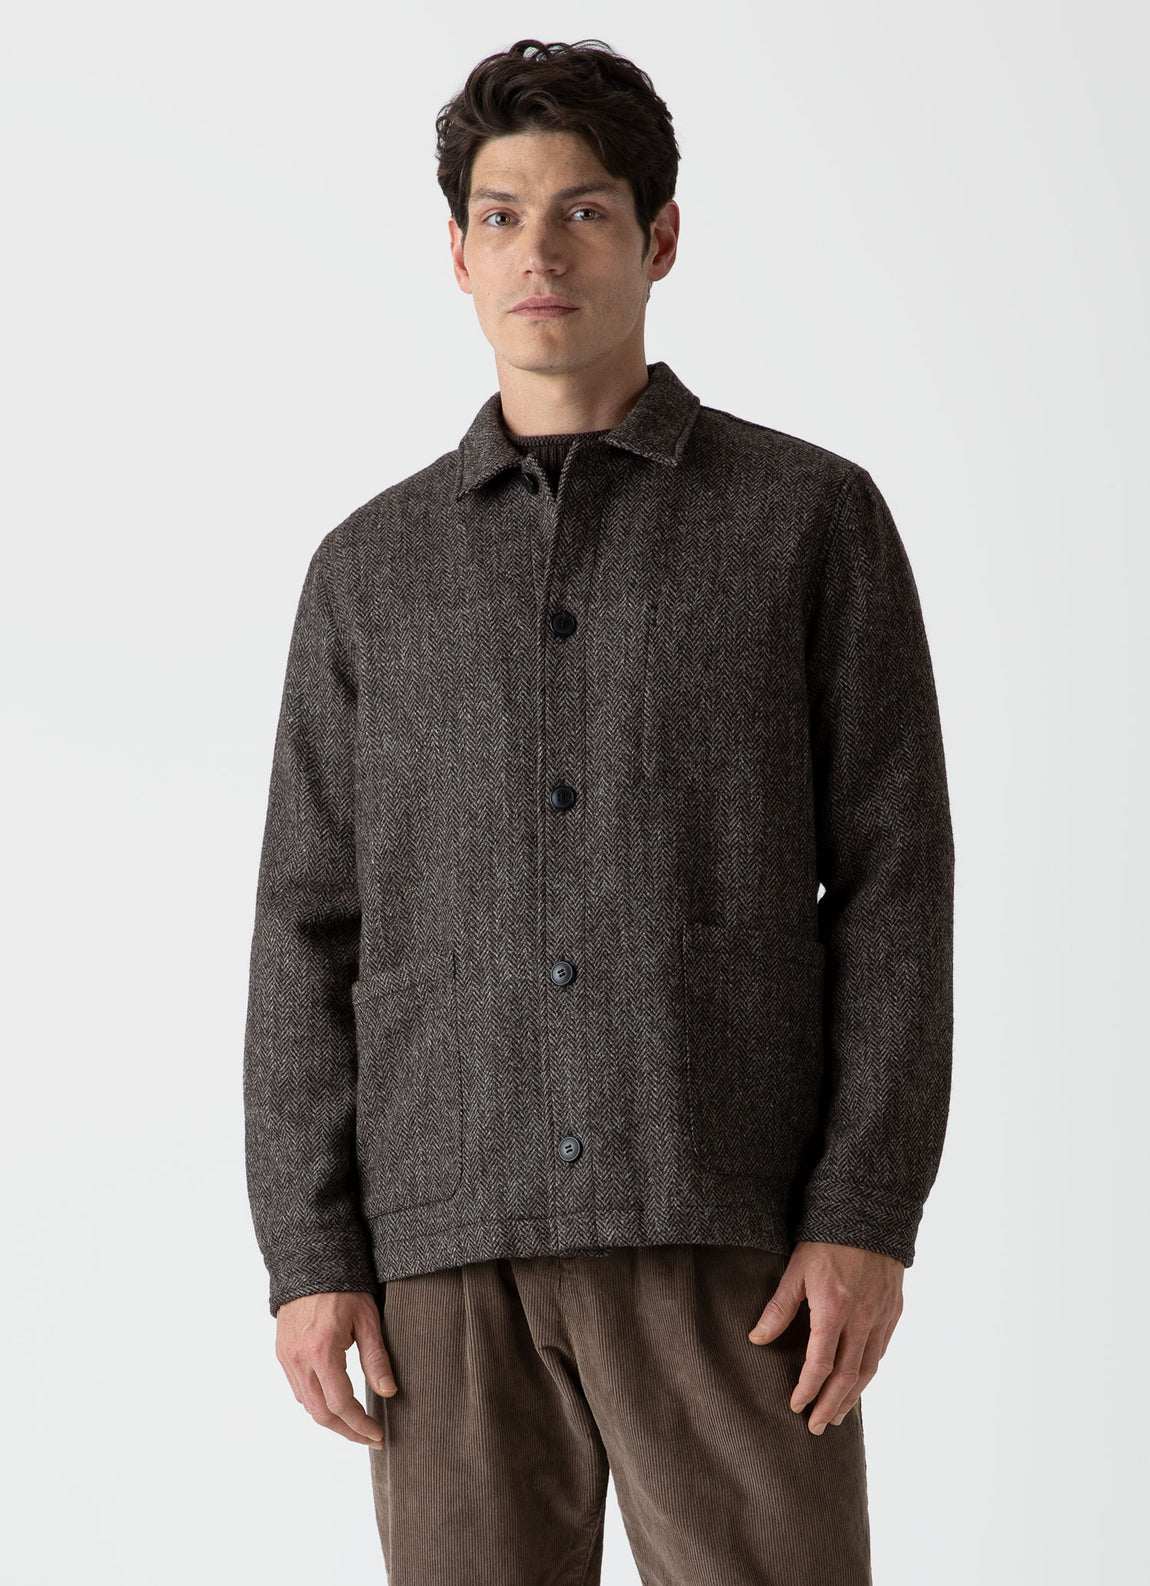 Men's British Wool Twin Pocket Jacket in Brown Herringbone | Sunspel